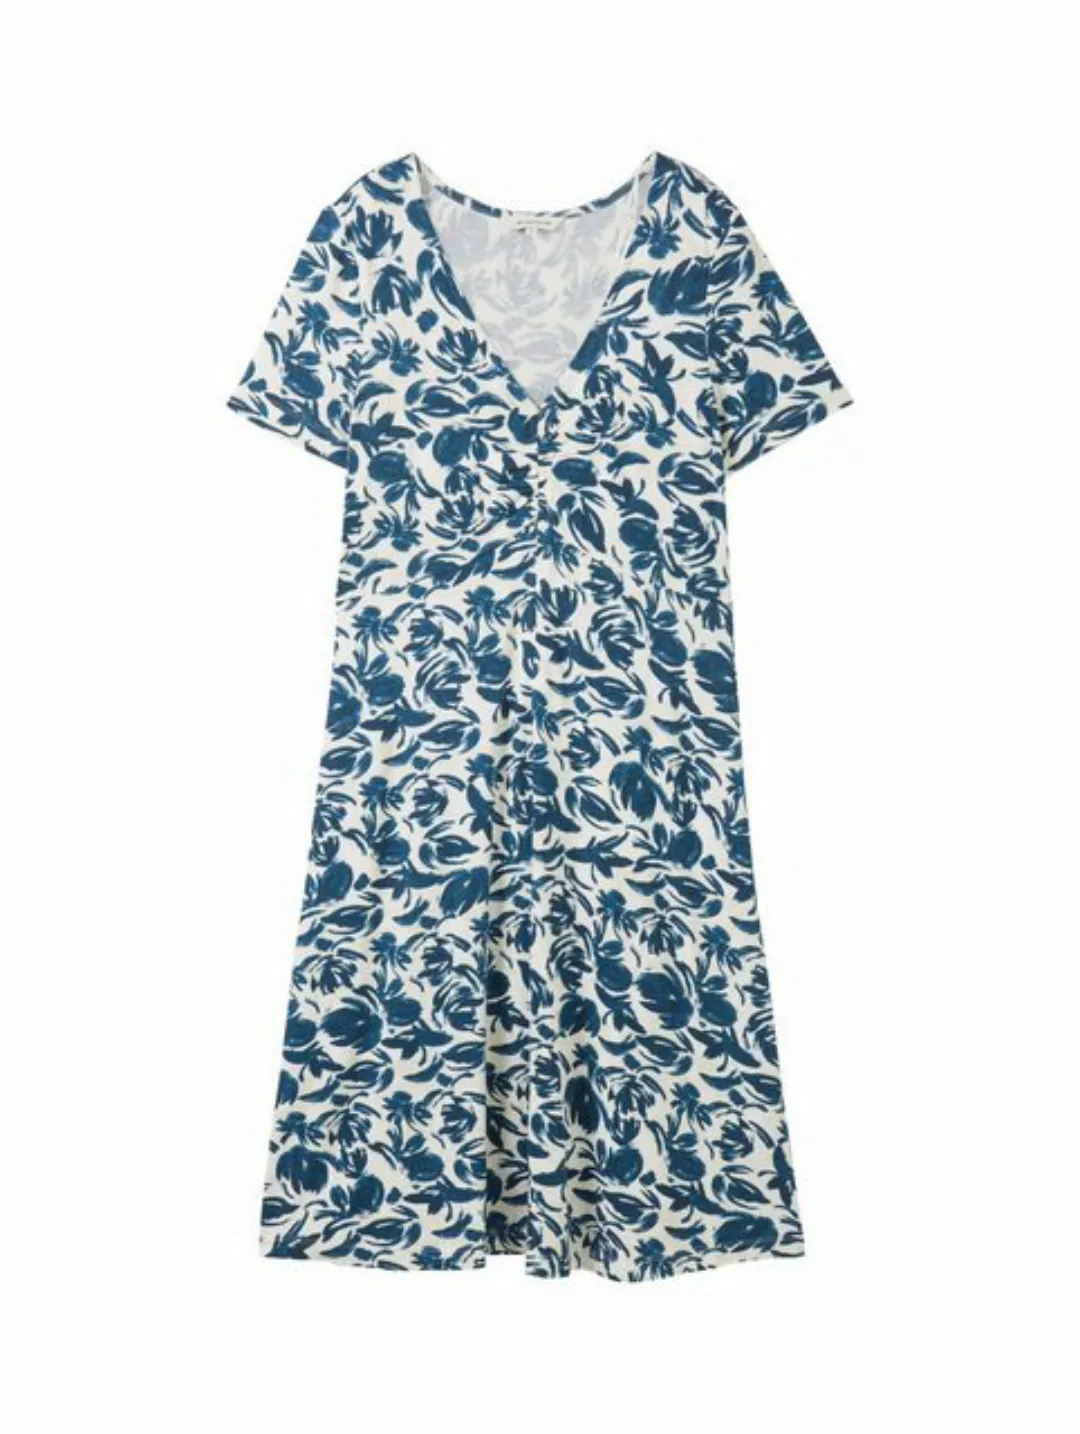 TOM TAILOR Sommerkleid easy jersey dress, blue abstract floral design günstig online kaufen